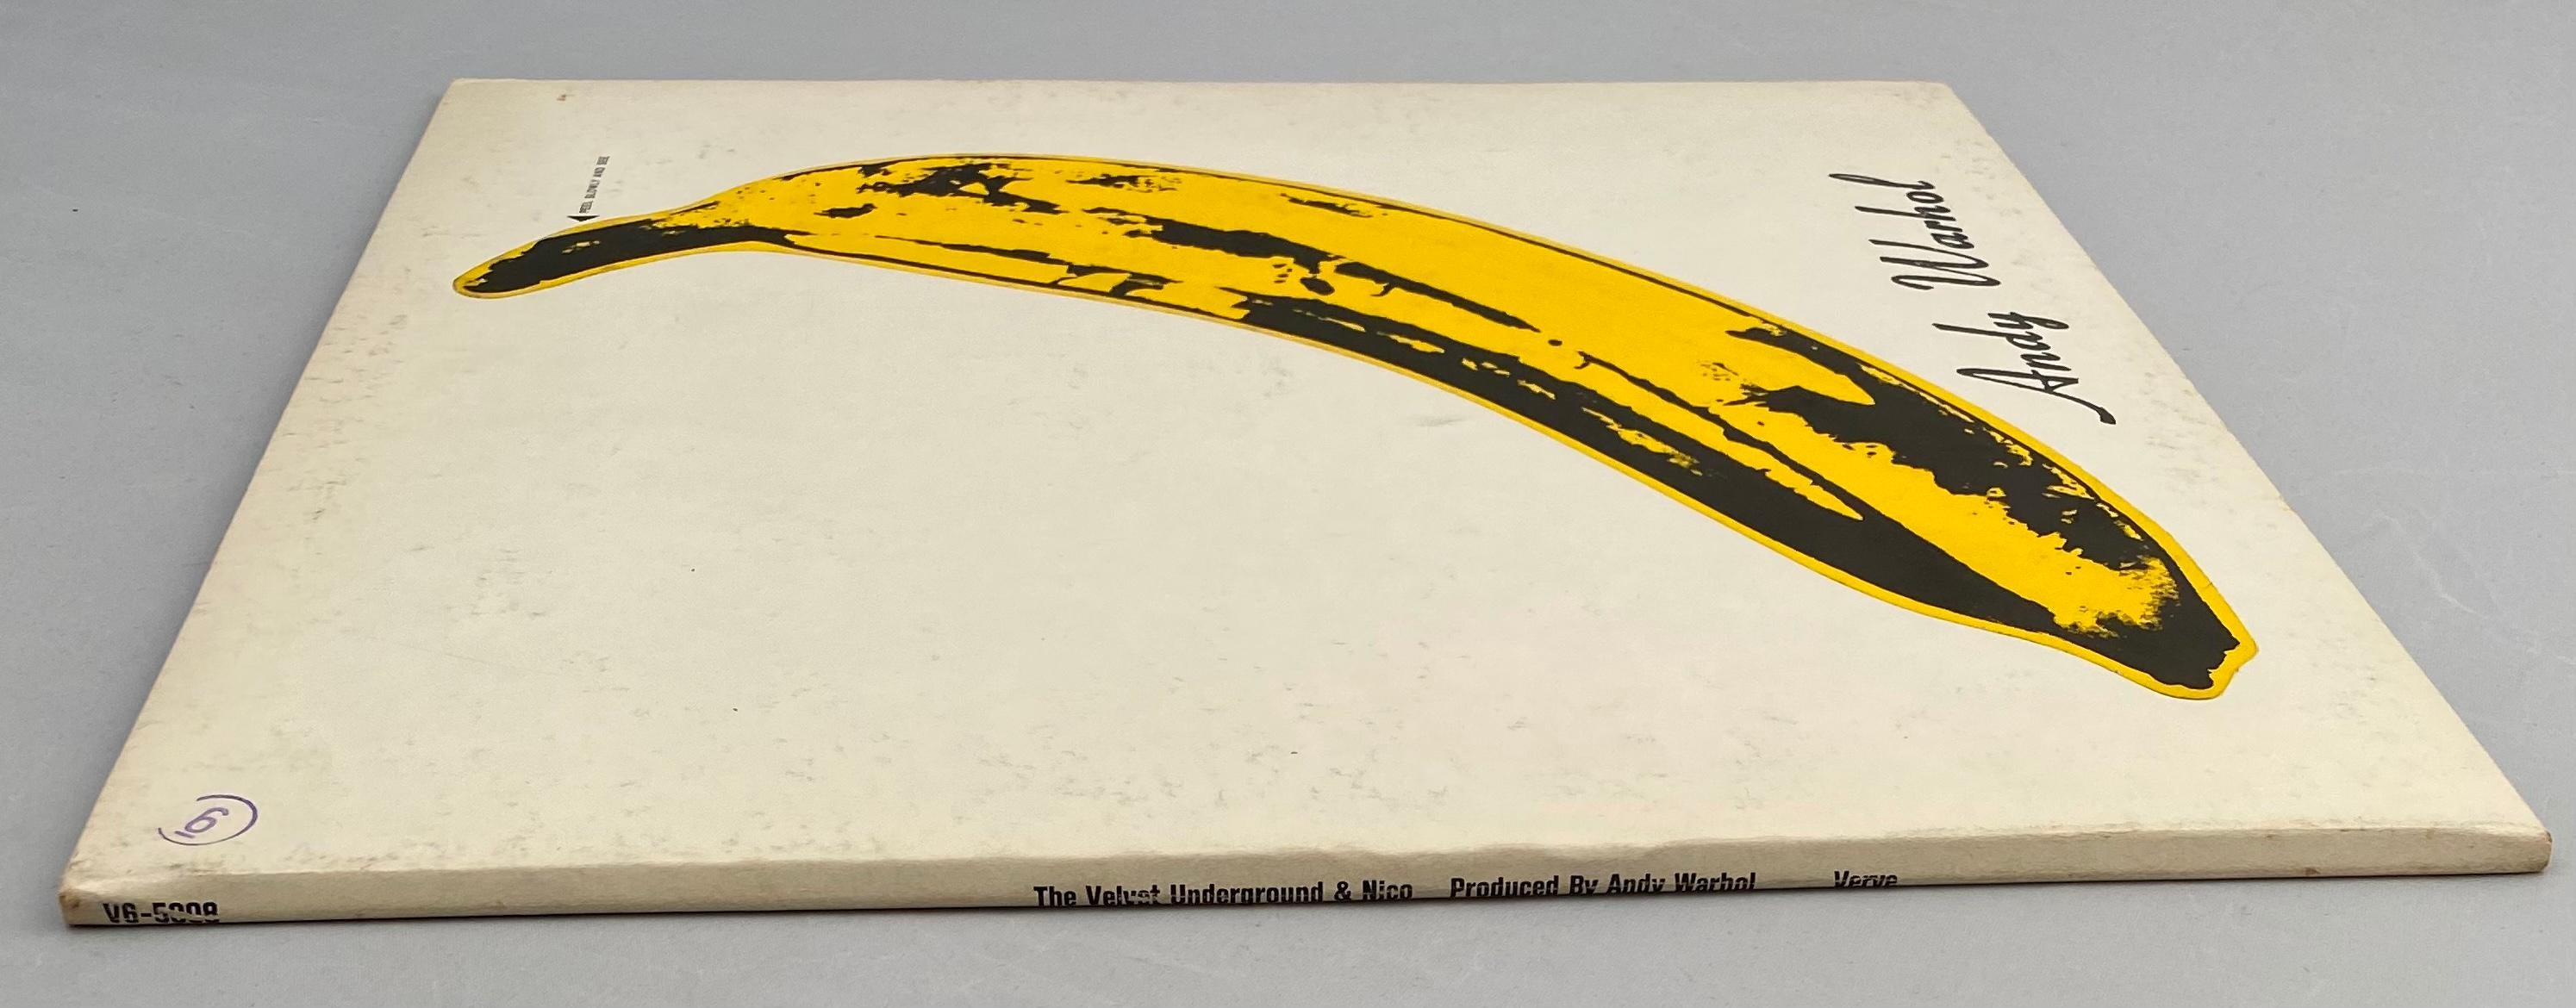 Andy Warhol Banana: Nico & The Velvet Underground vinyl record (1967 original)  3